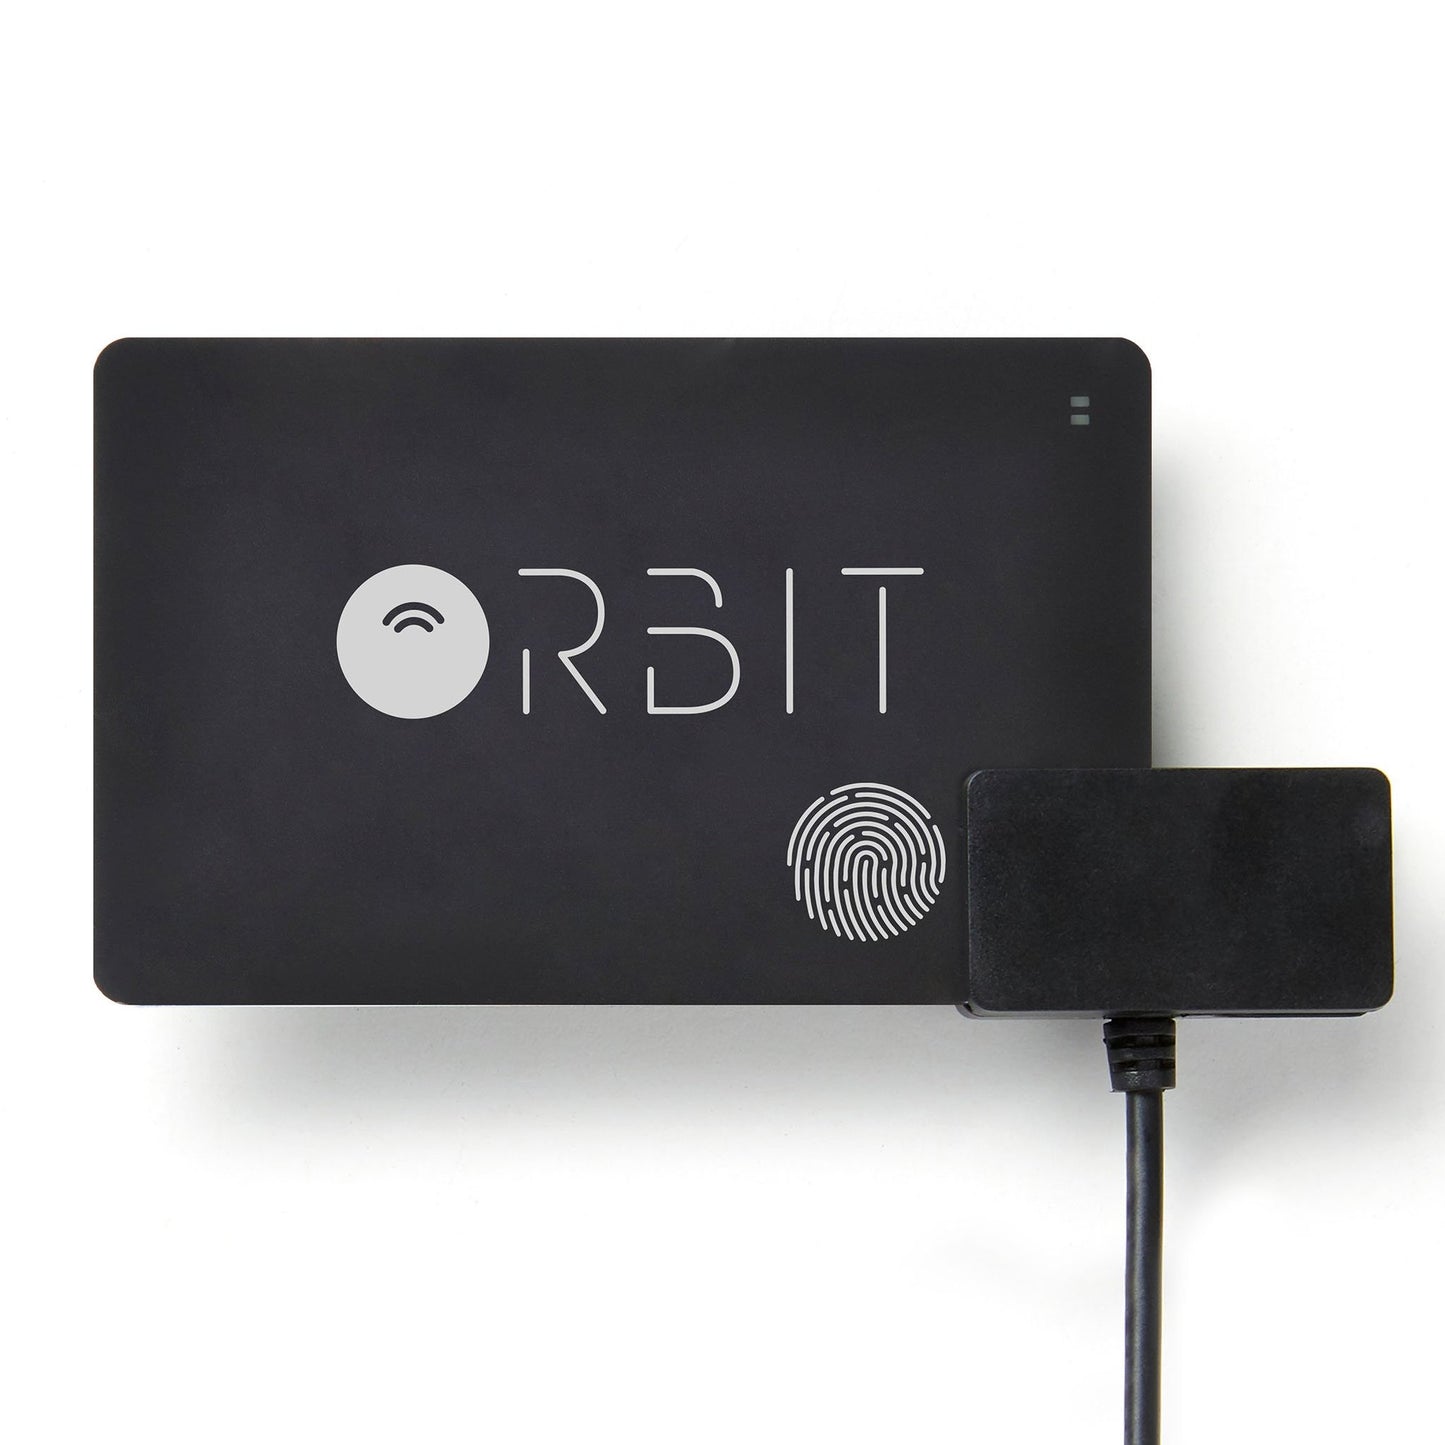 Orbit Card Tracker